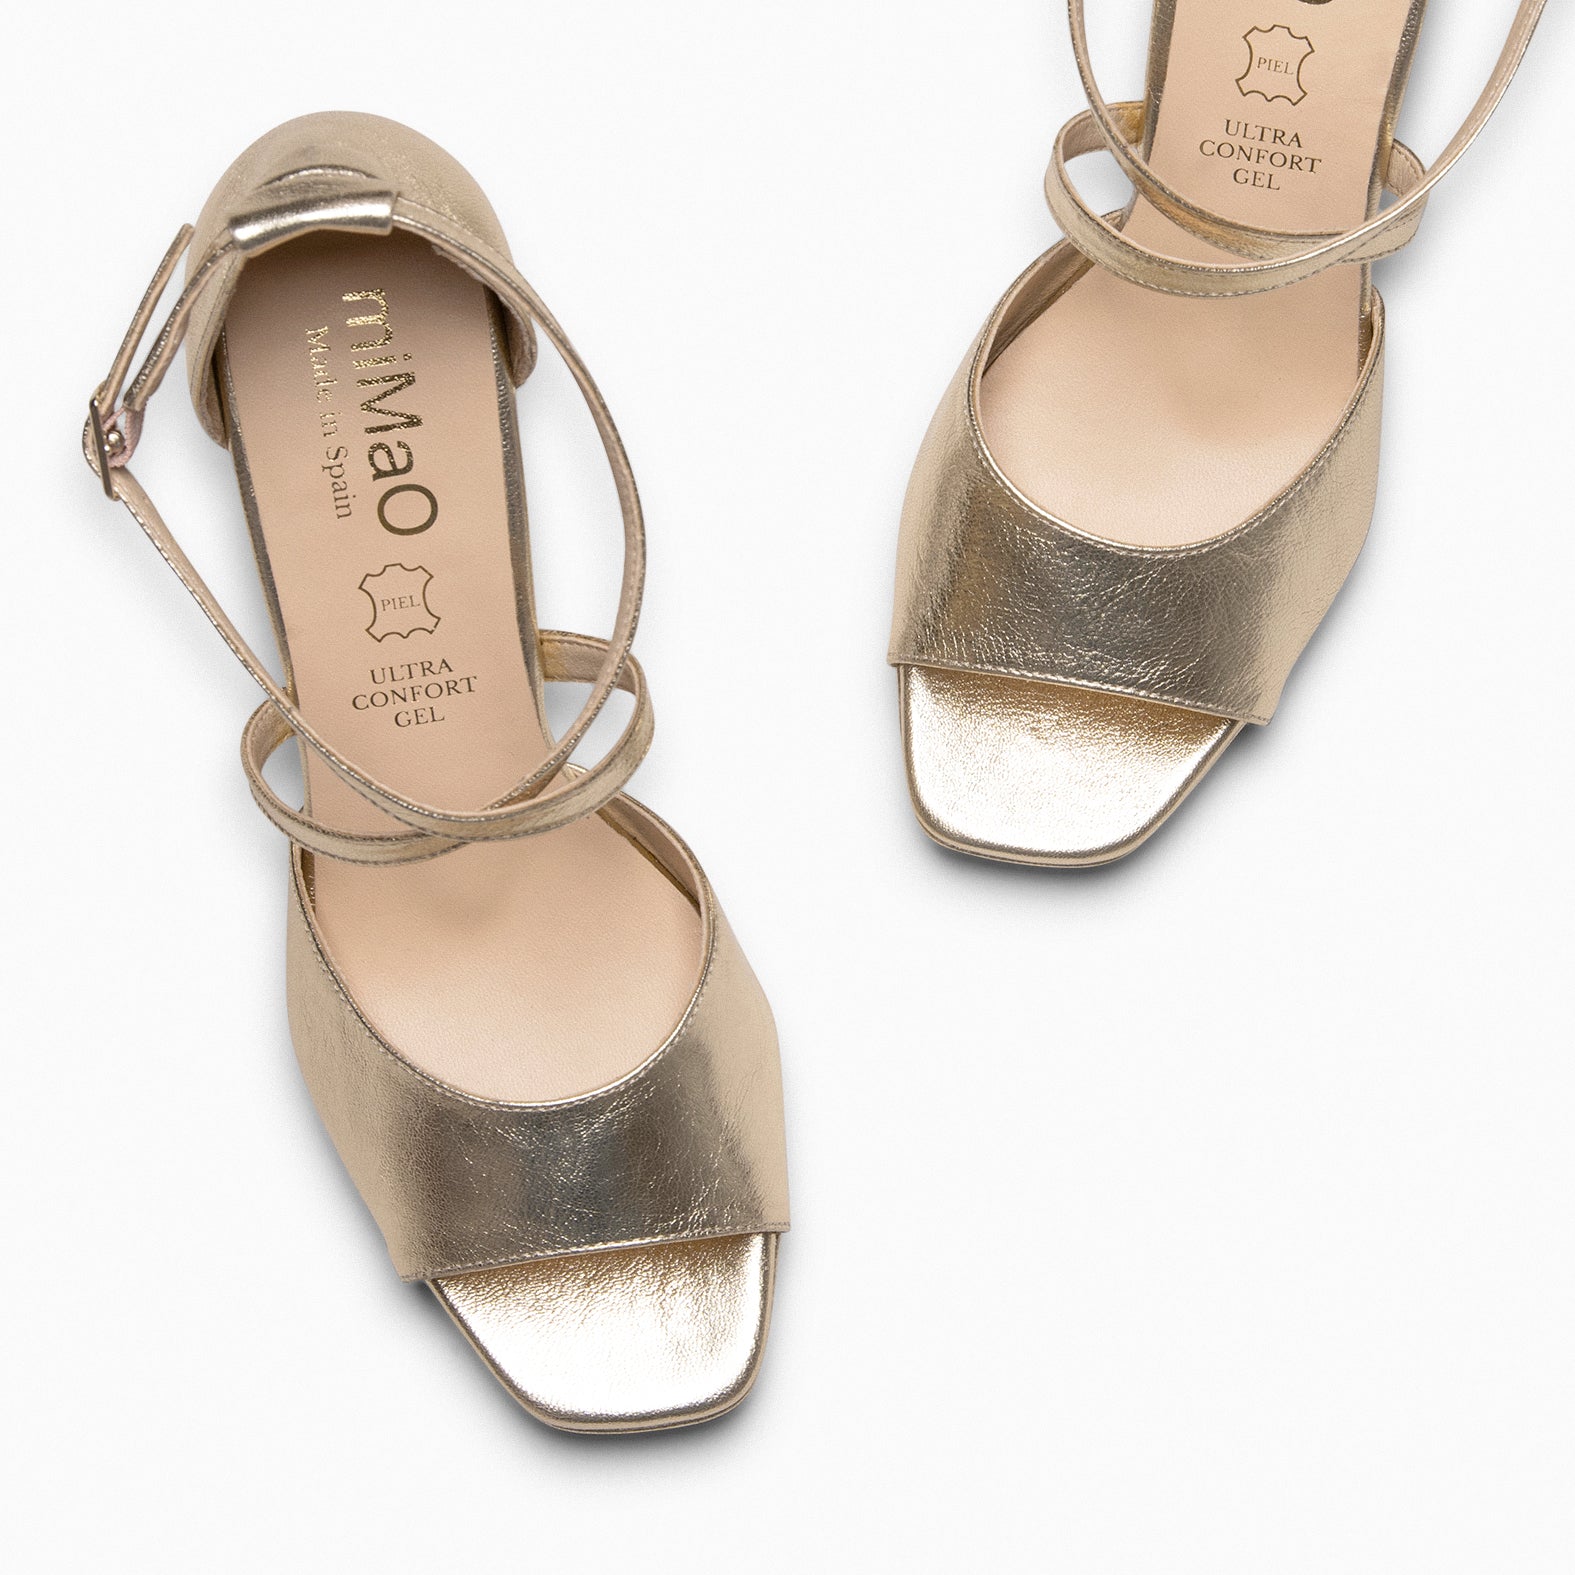 ROSSA - GOLDEN party sandals with heel